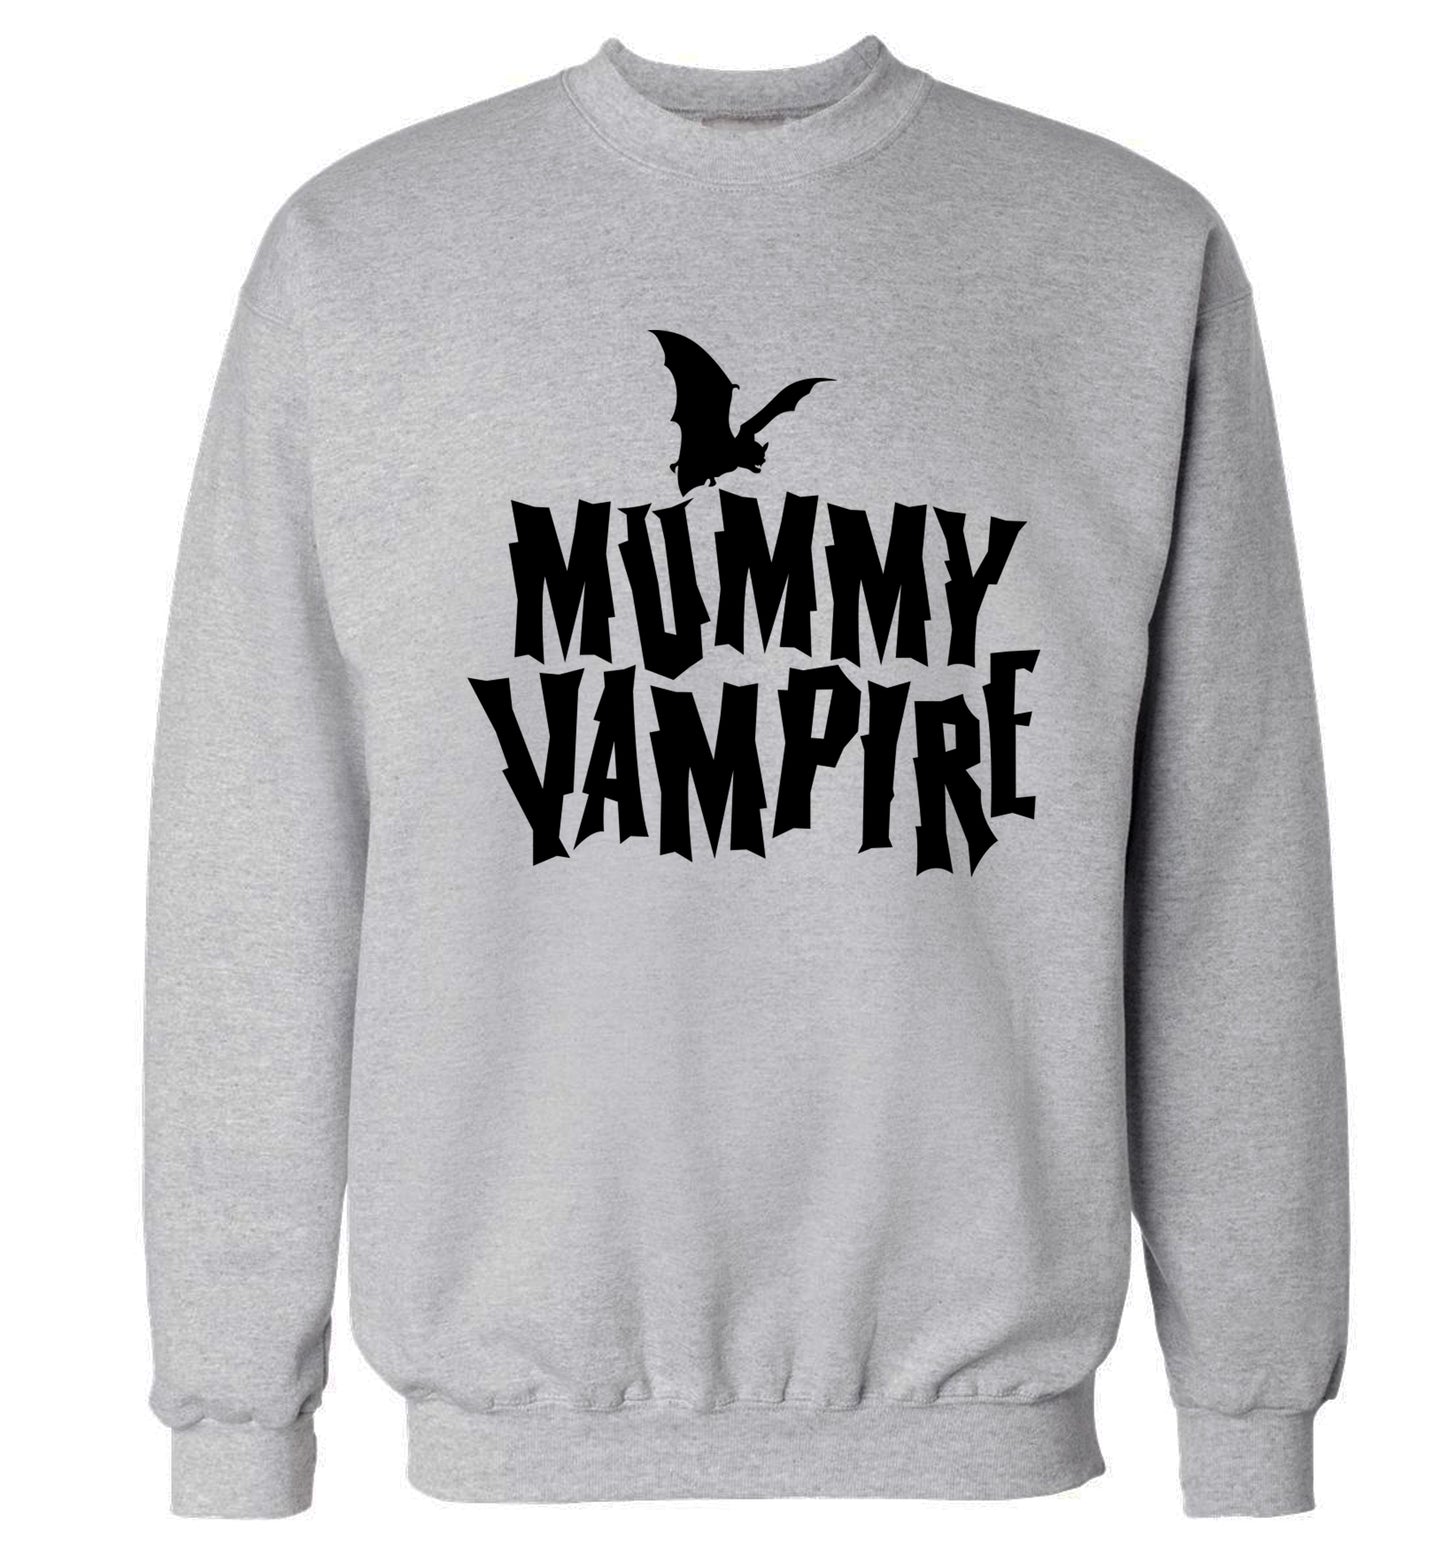 Mummy vampire adult's unisex grey sweater 2XL